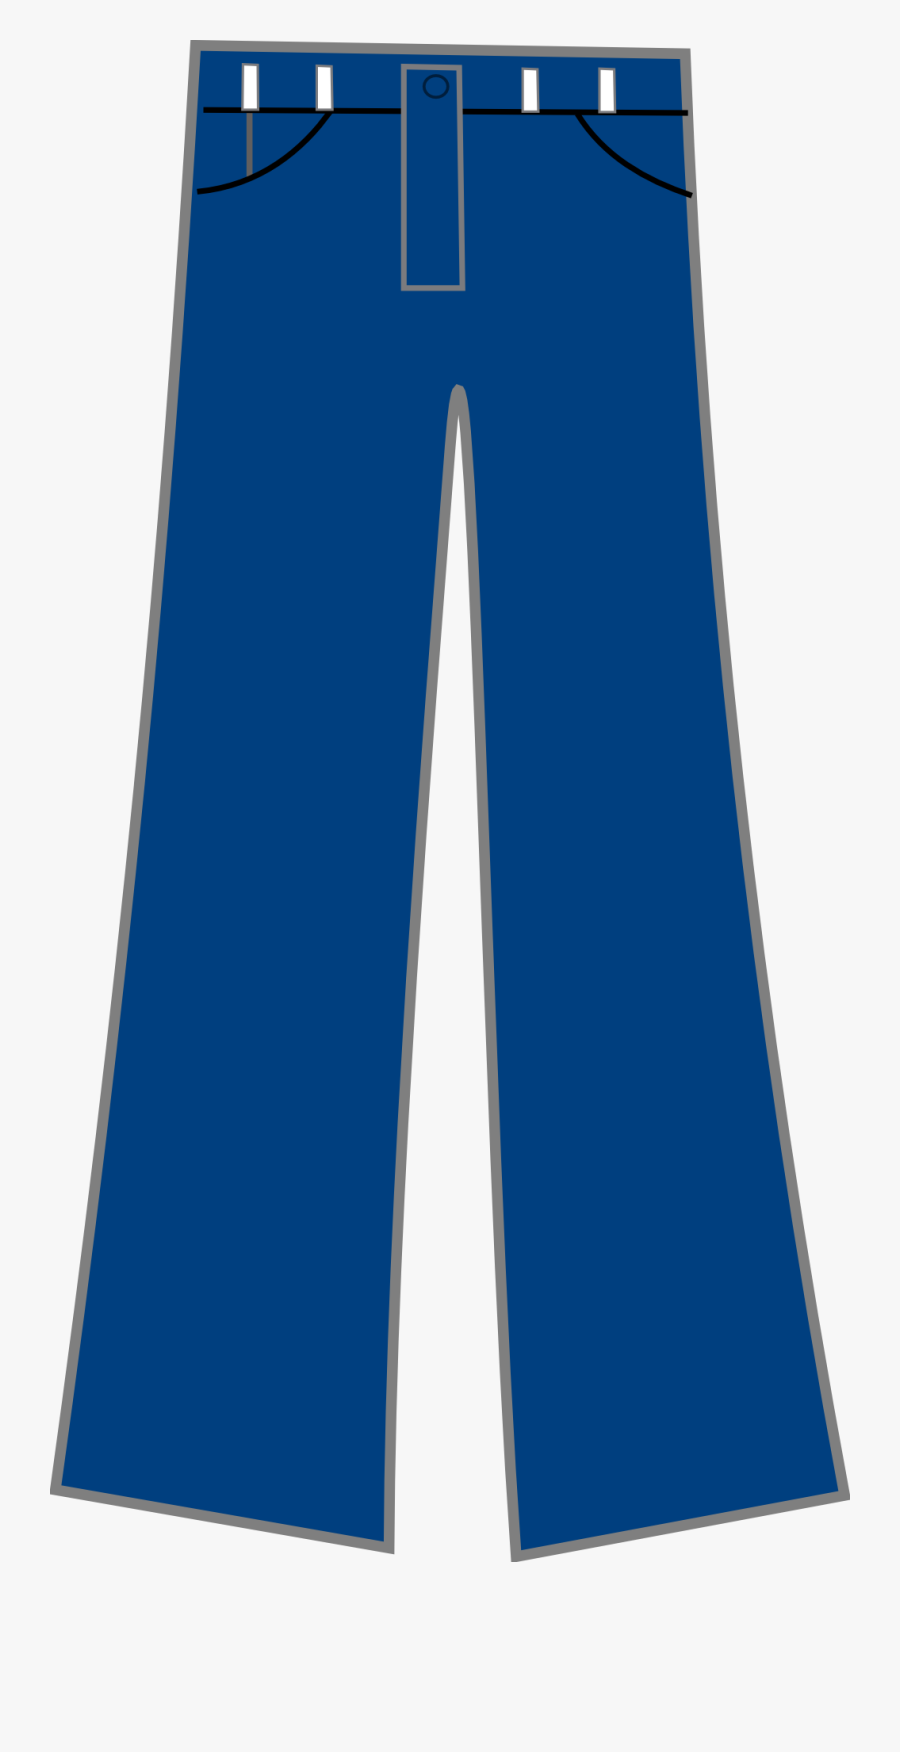 Blue Jeans Clipart Clip Art Library - vrogue.co